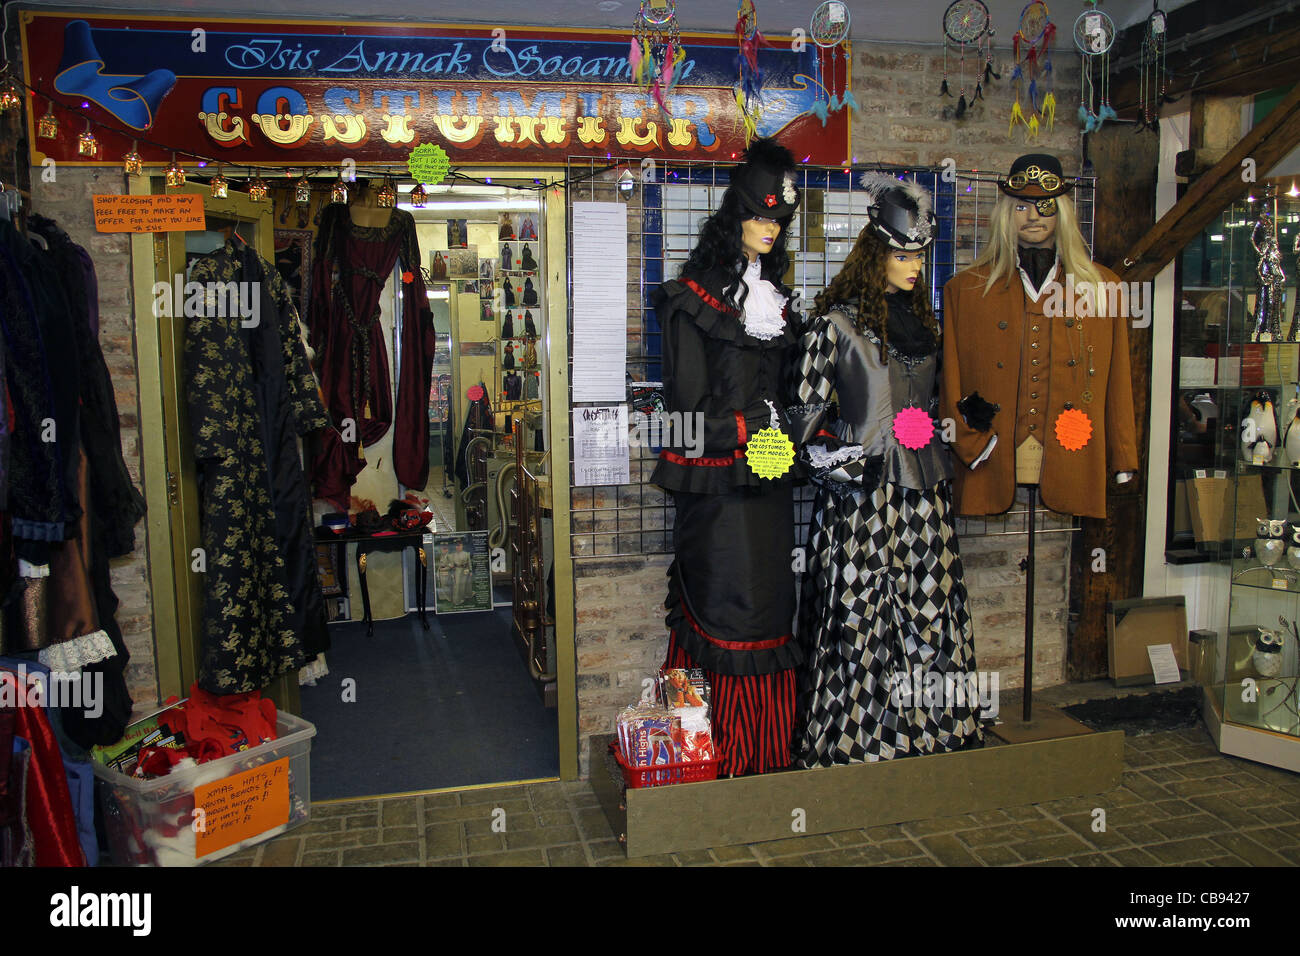 Goth dress shop, Whitby. Stock Photo